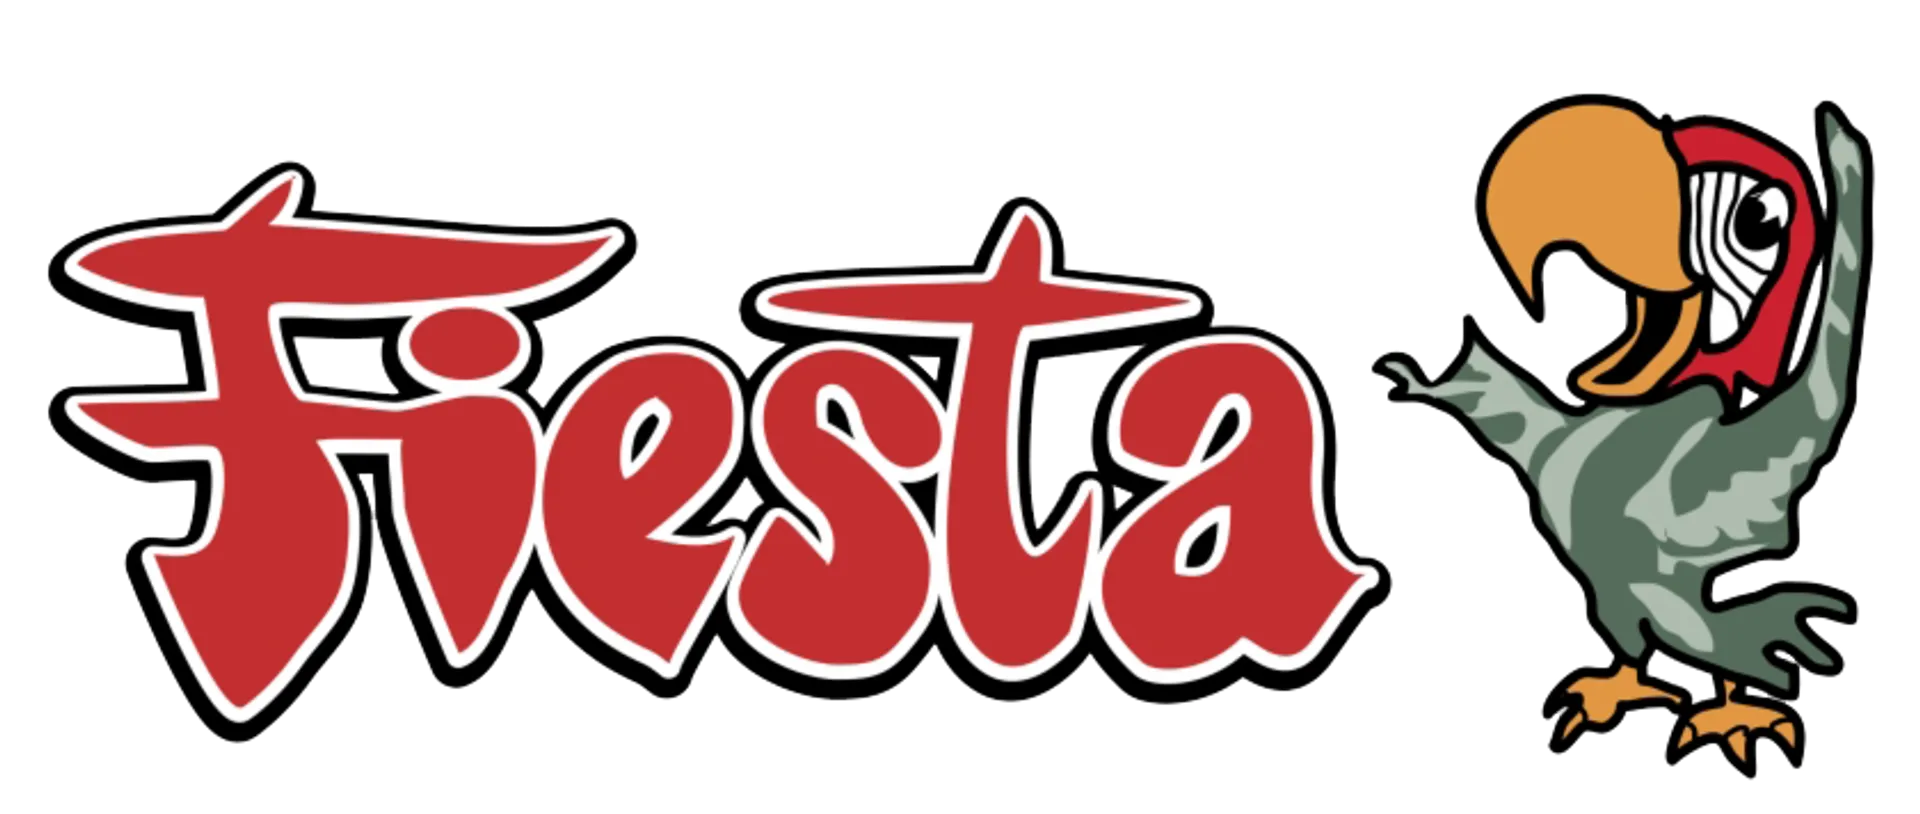 FIESTA MART logo current weekly ad